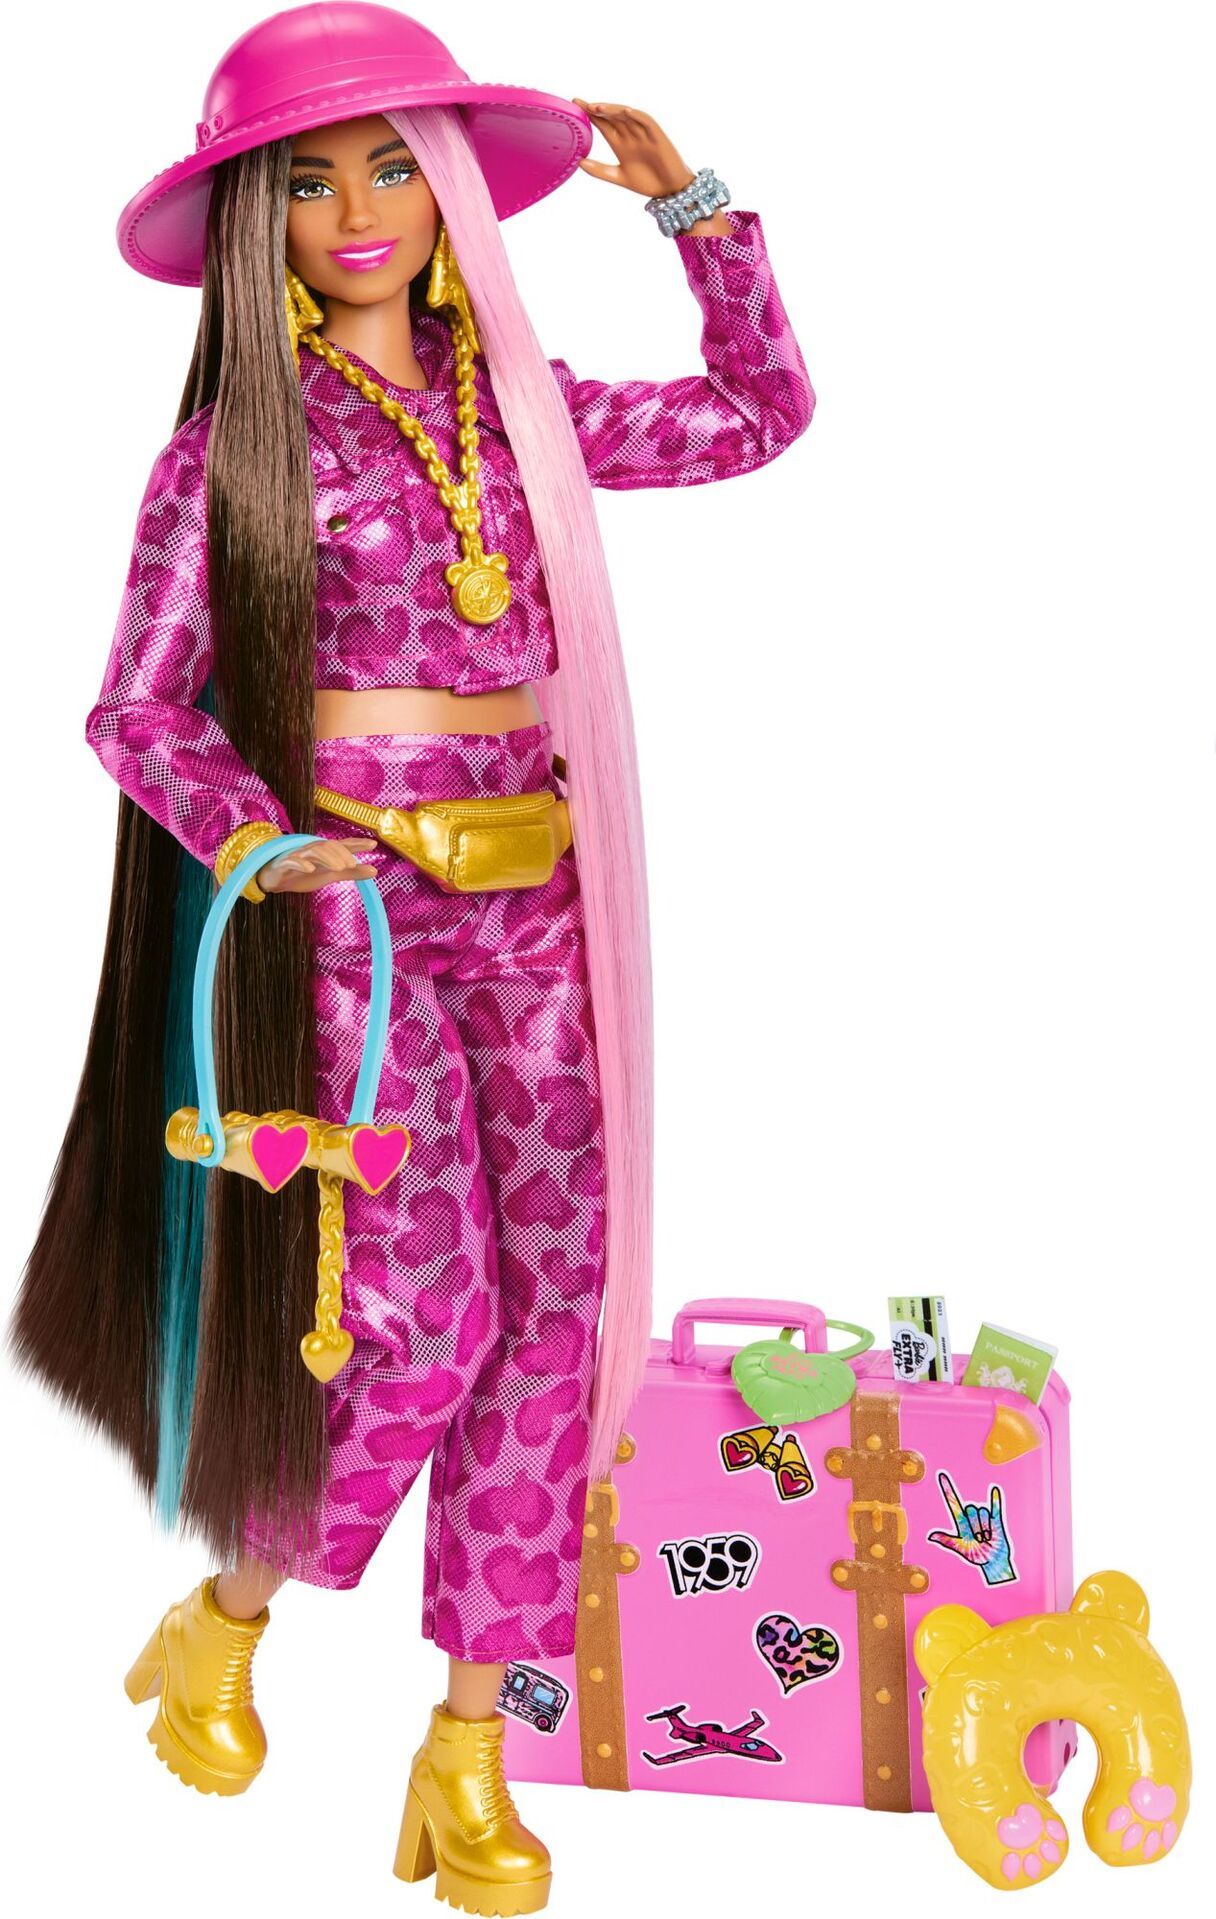 Barbie extra fly safari